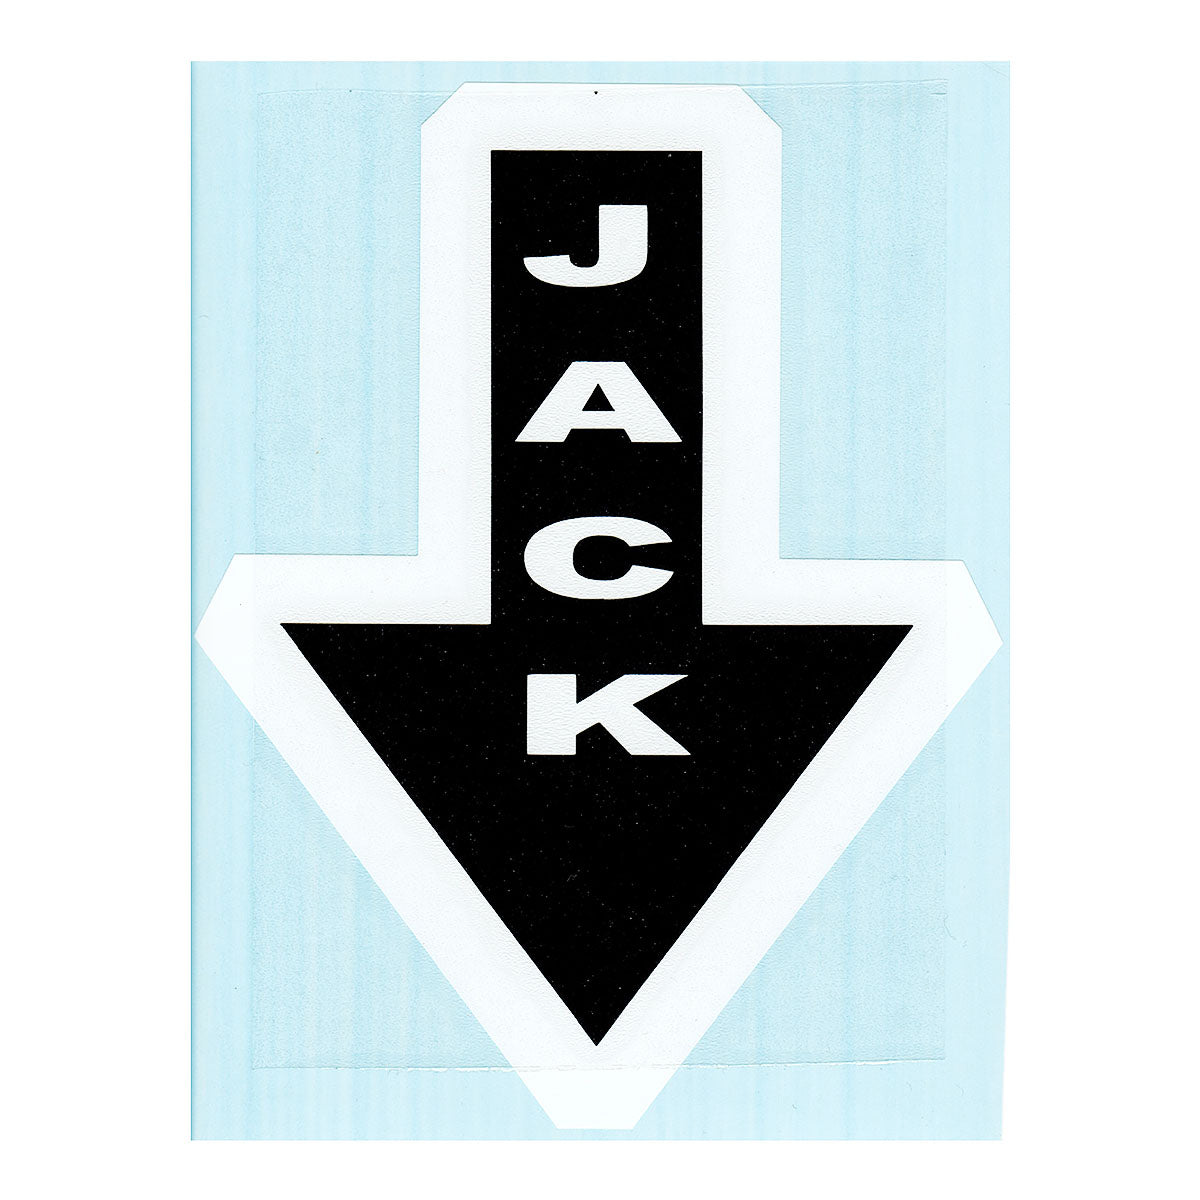 Jack Decal (Black on White)